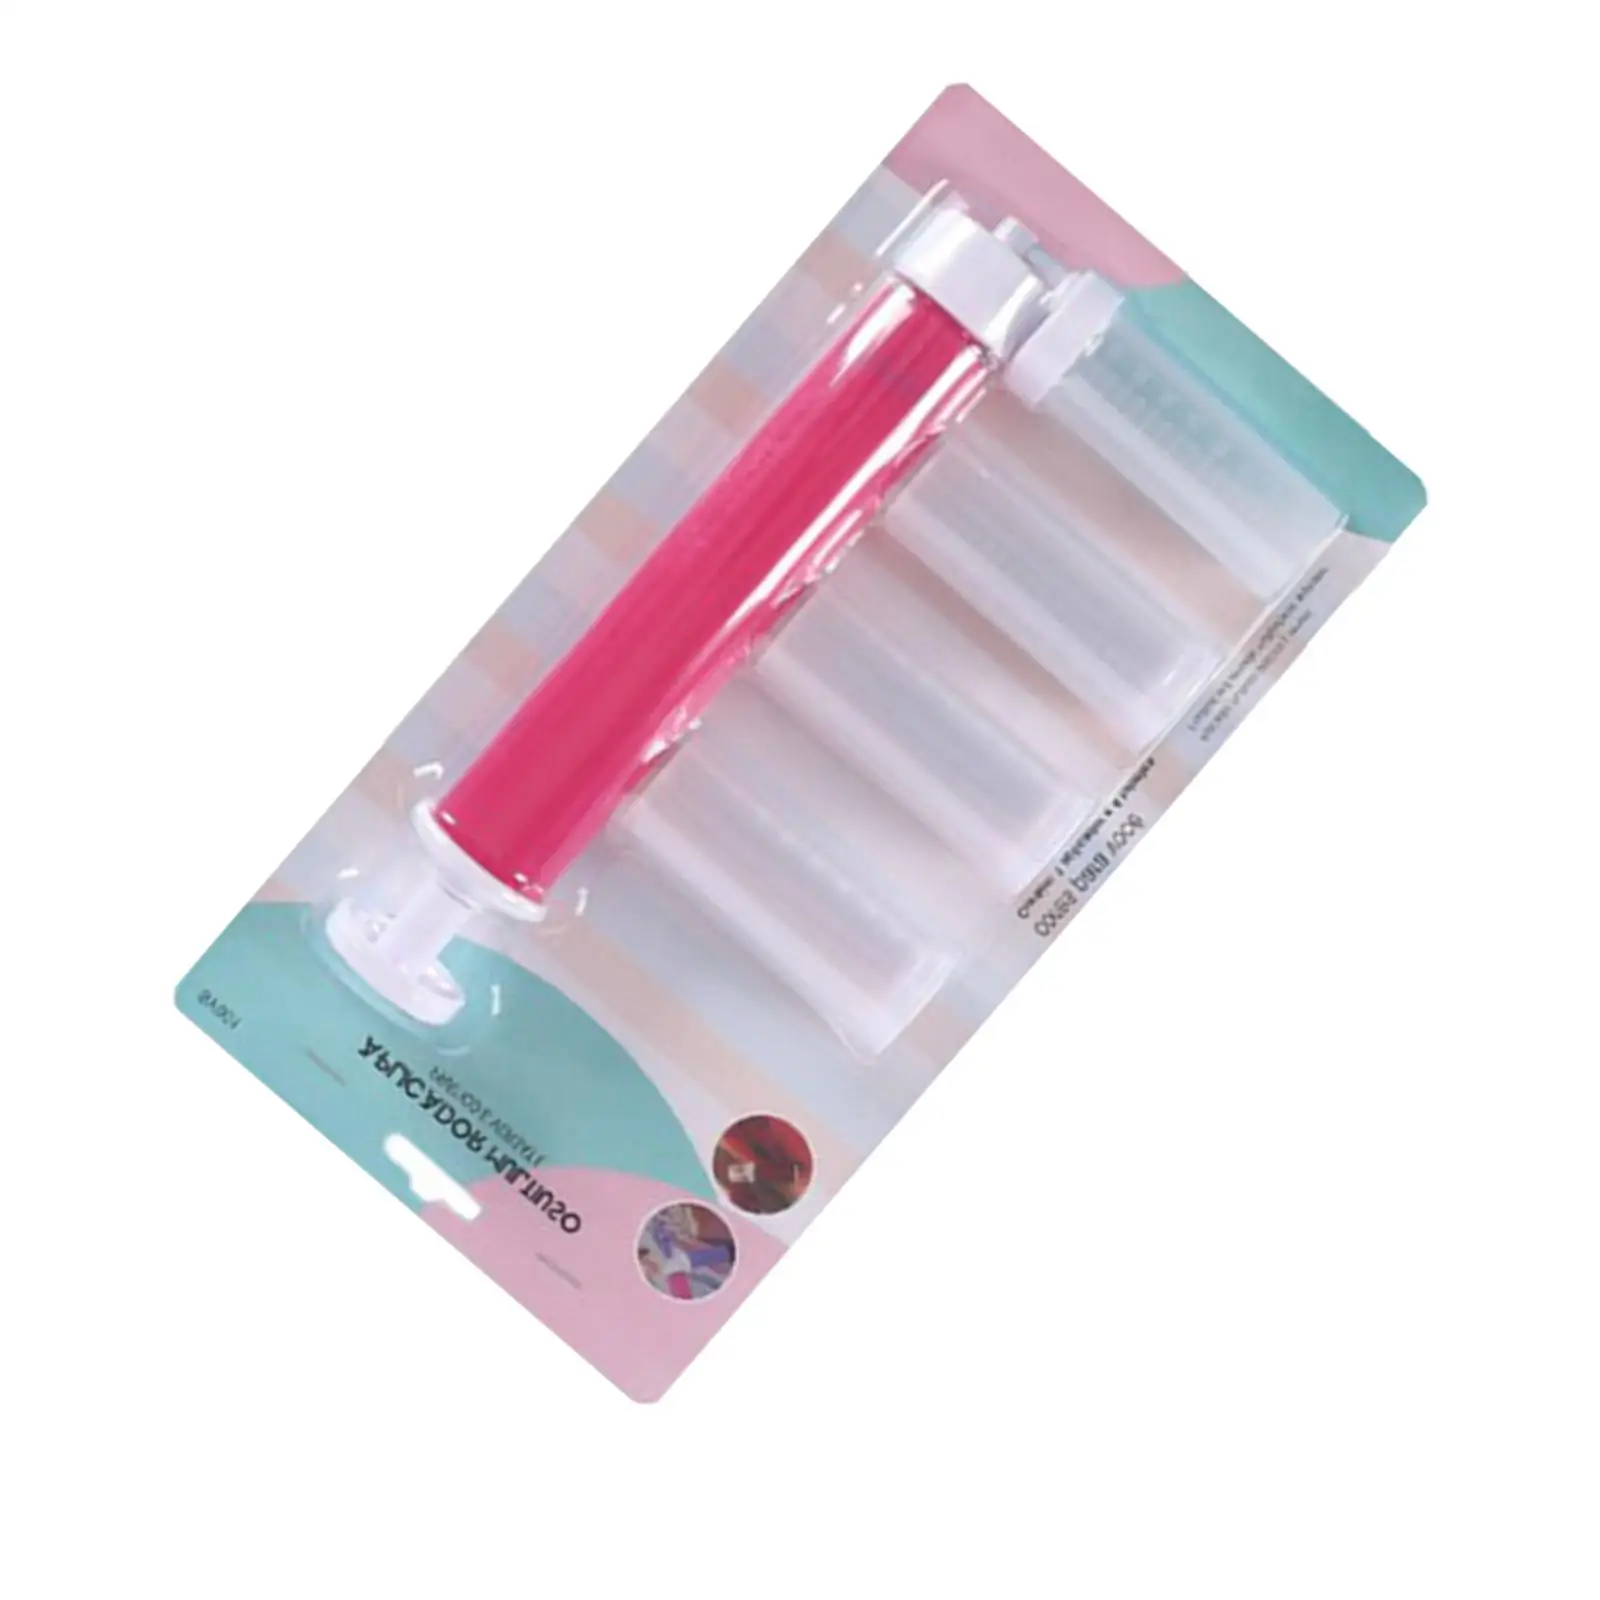 4 Color Manual Pastry Airbrush Gun Cake Sprayer Para Pasteleria